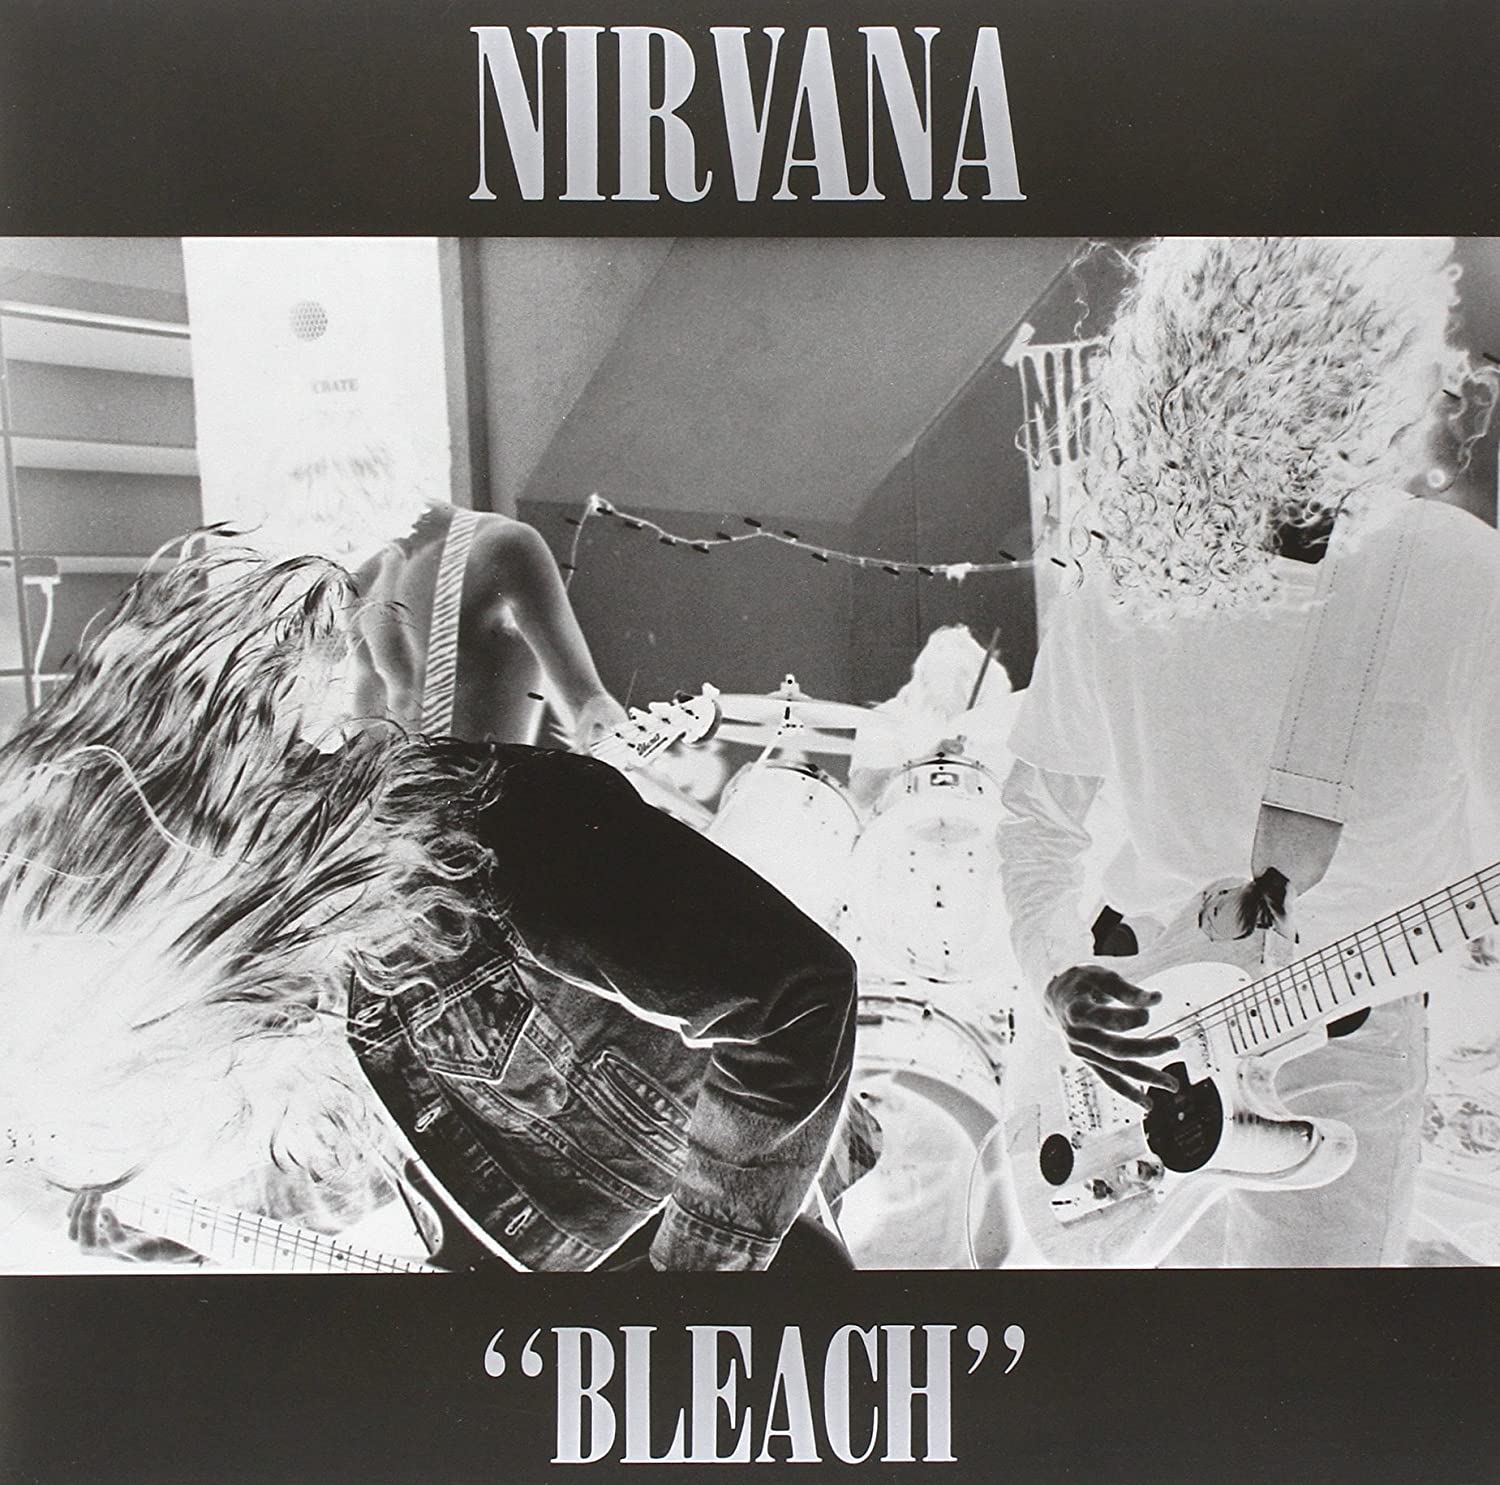 Nirvana Bleach Vinyl LP